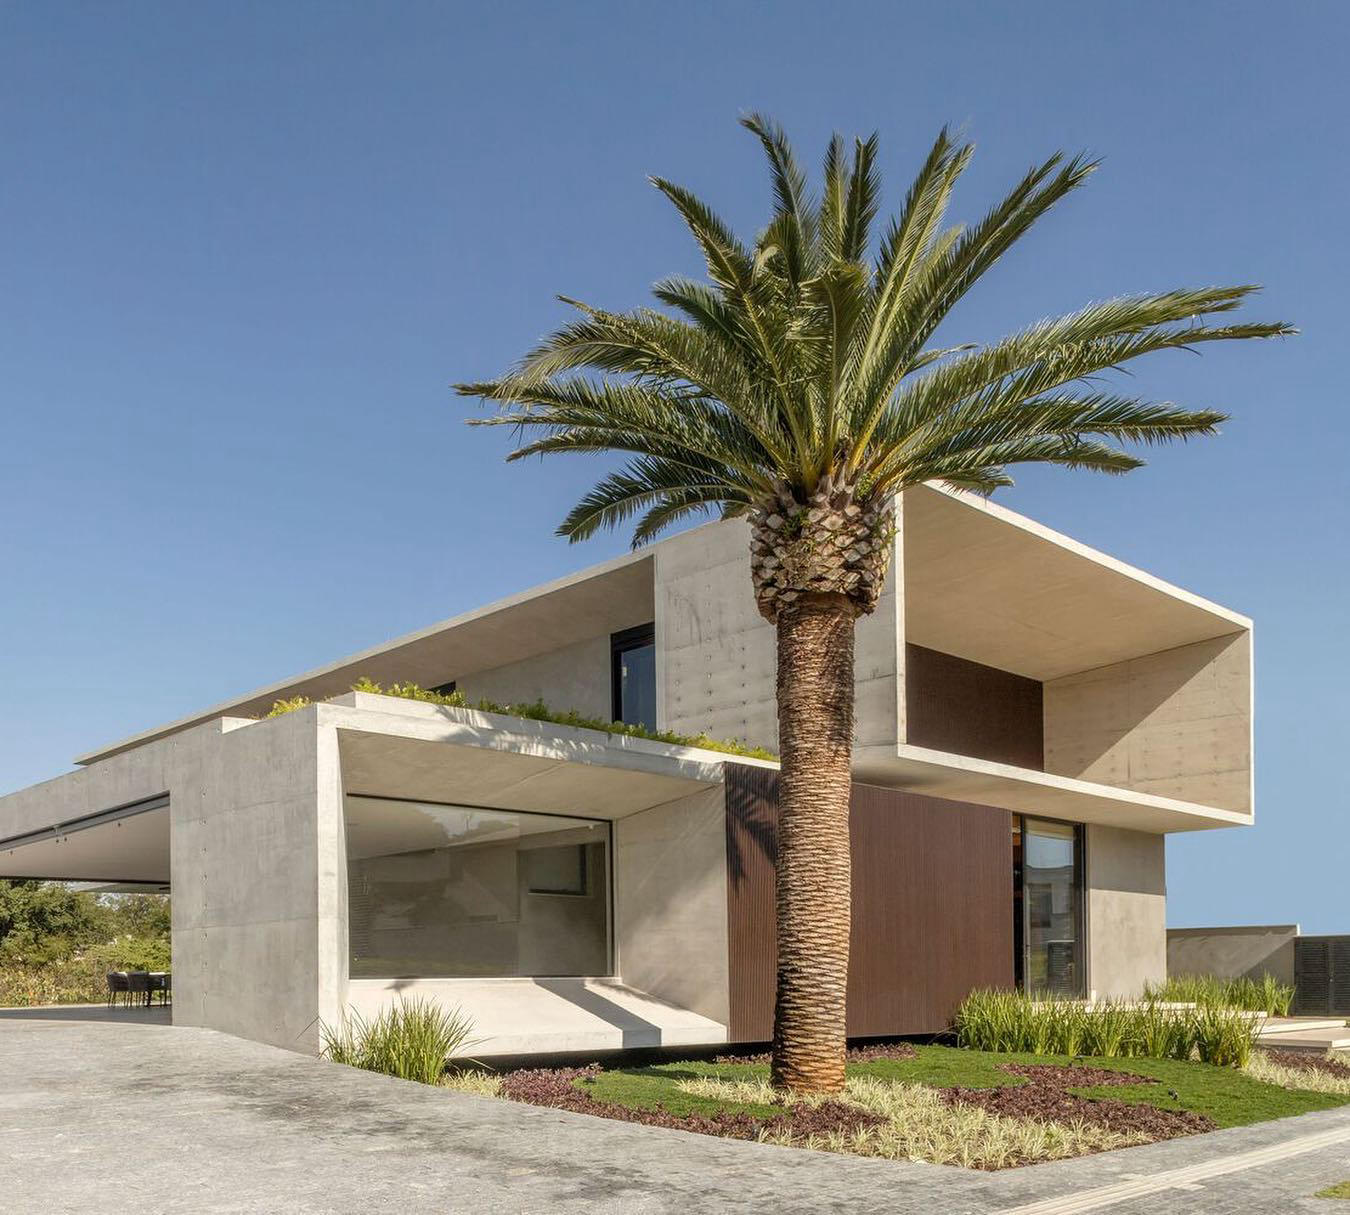 image  1 TP HOUSE designed by Leo Romano #leoromanoarquitetura, located in #jardinsmunique, #Brazil and photo